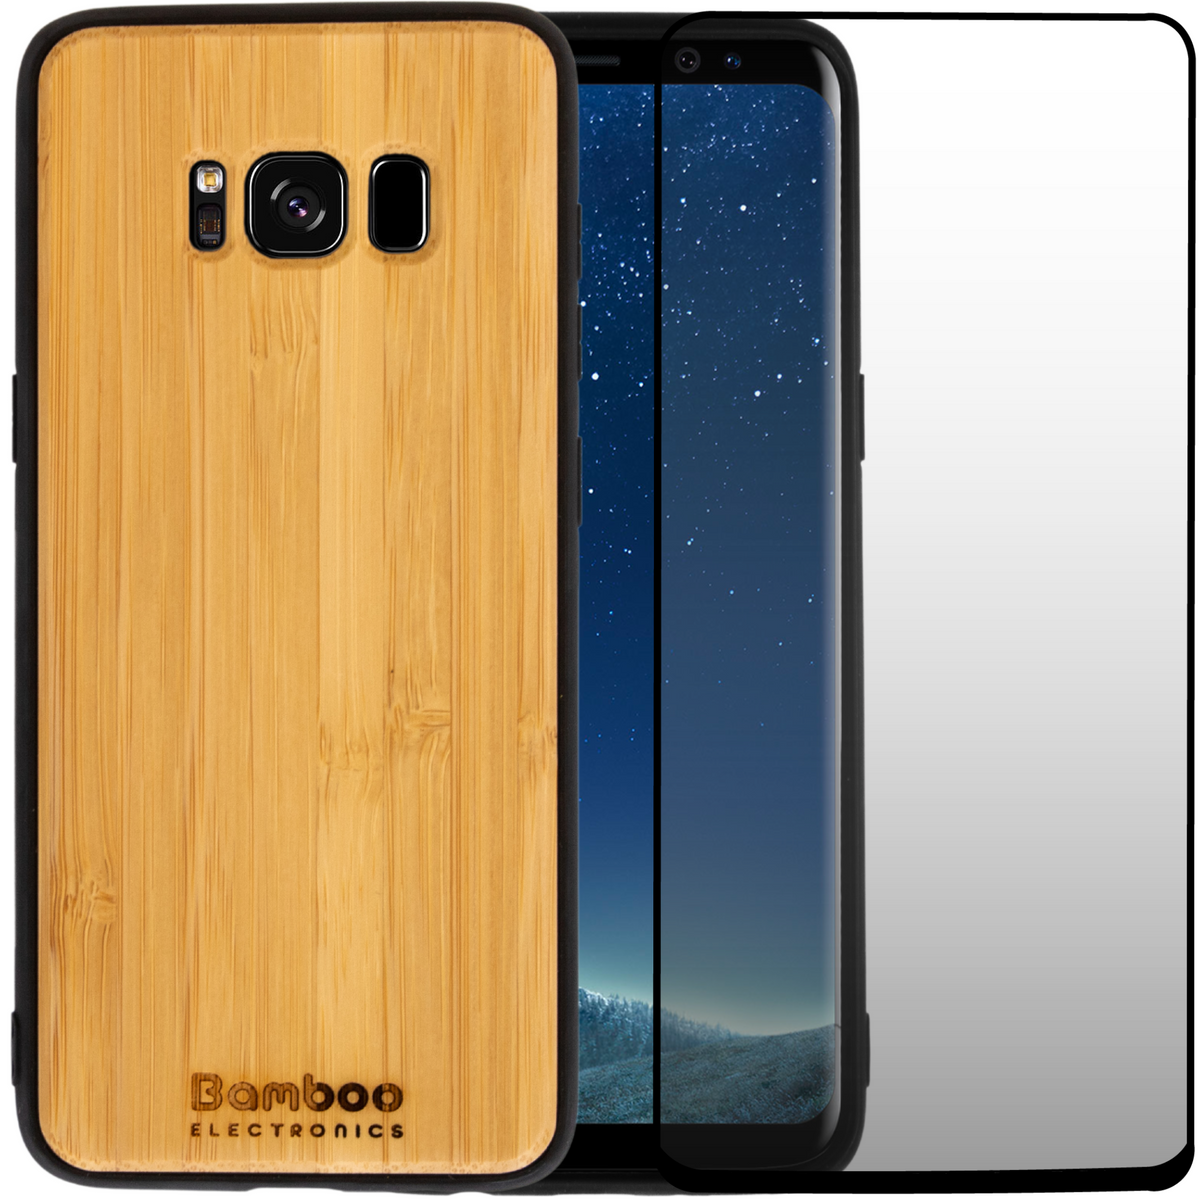 Coque Samsung GS8 en bois + Écran de protection